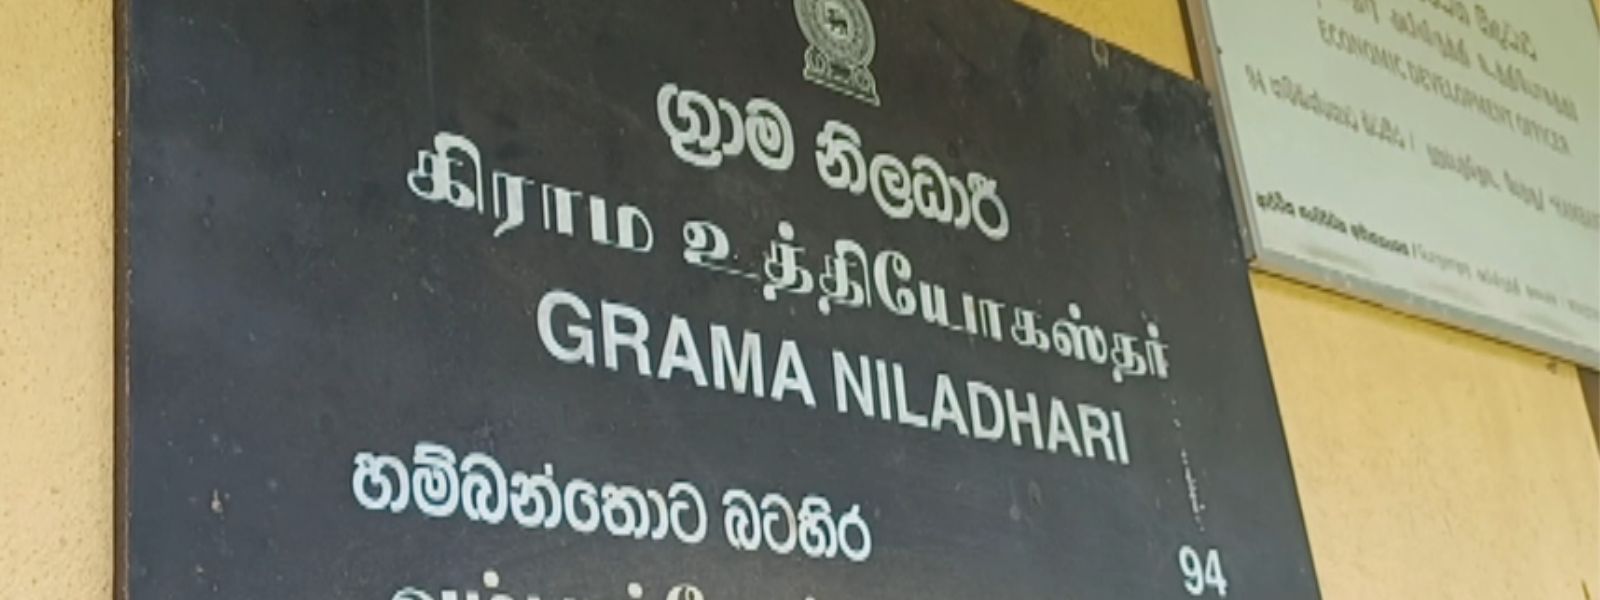 Grama Niladhari Strike Stalls Essential Services